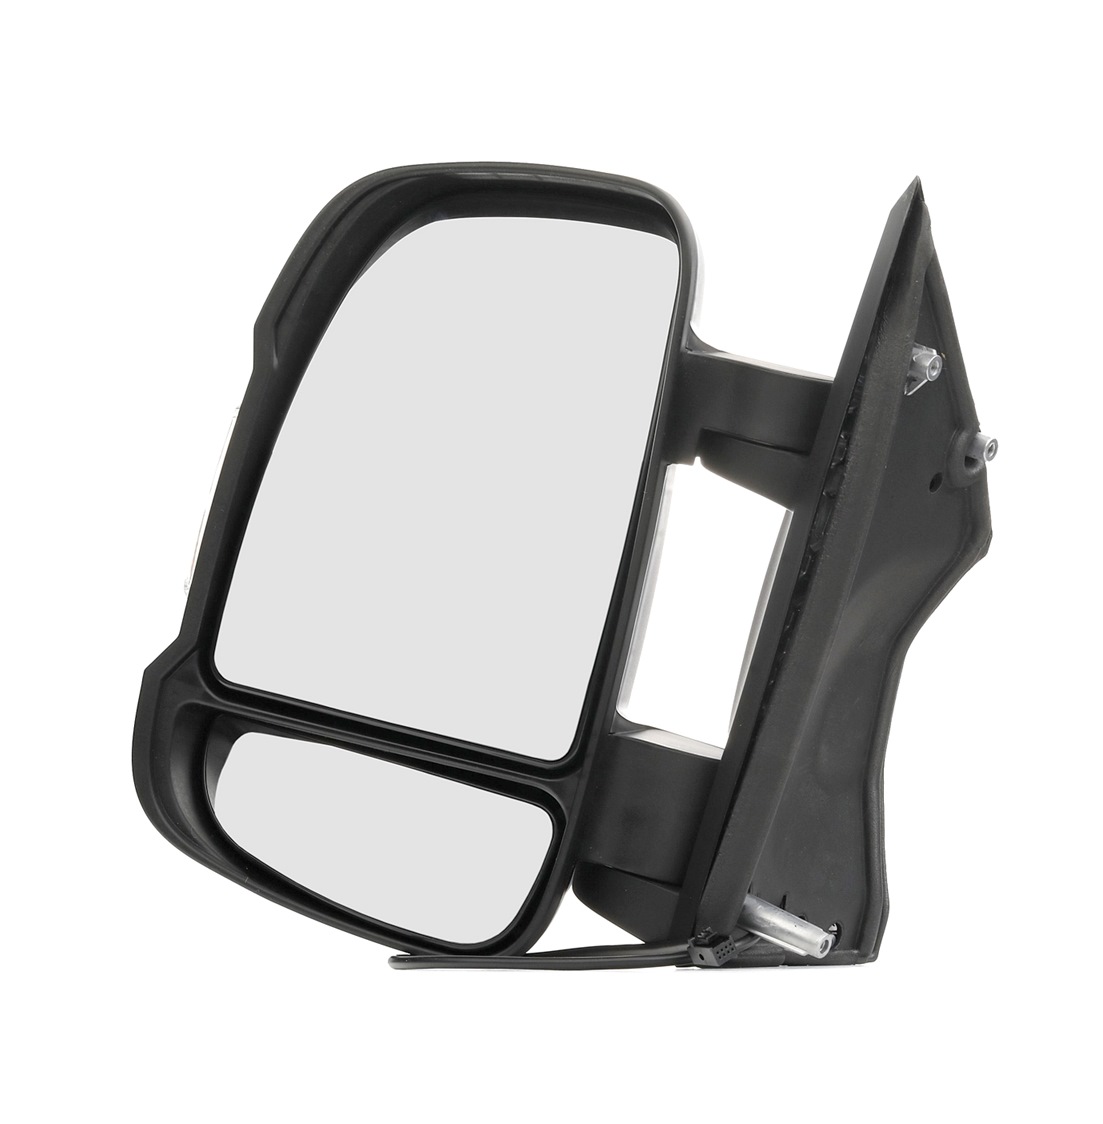 STARK SKOM-1040045 Wing mirror Left, black, Manual, for manual mirror adjustment, Convex, Short mirror arm